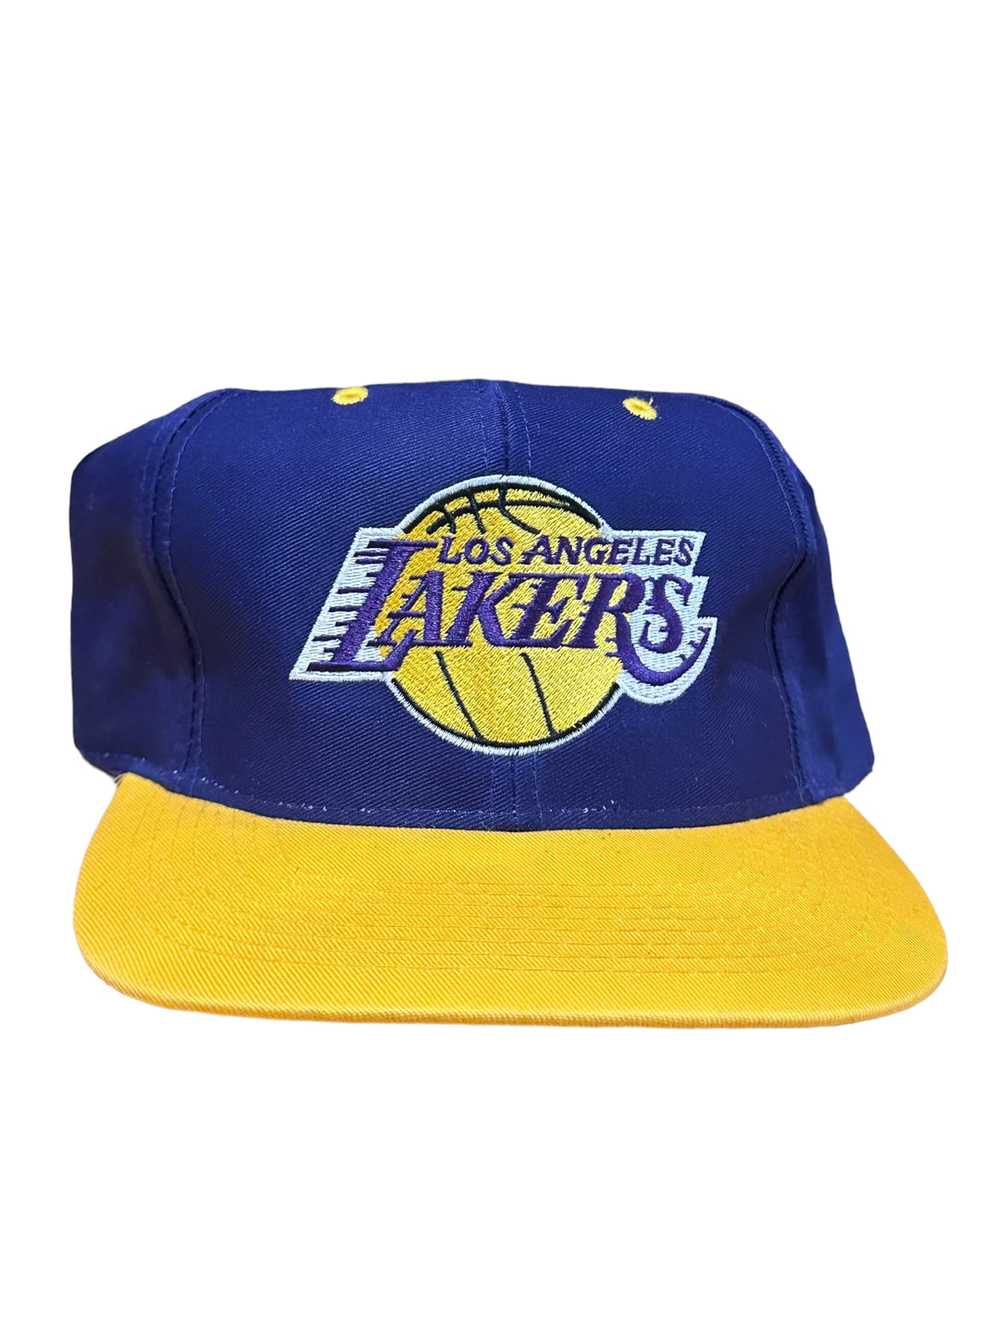 Lakers Plain Logo SnapBack - image 1